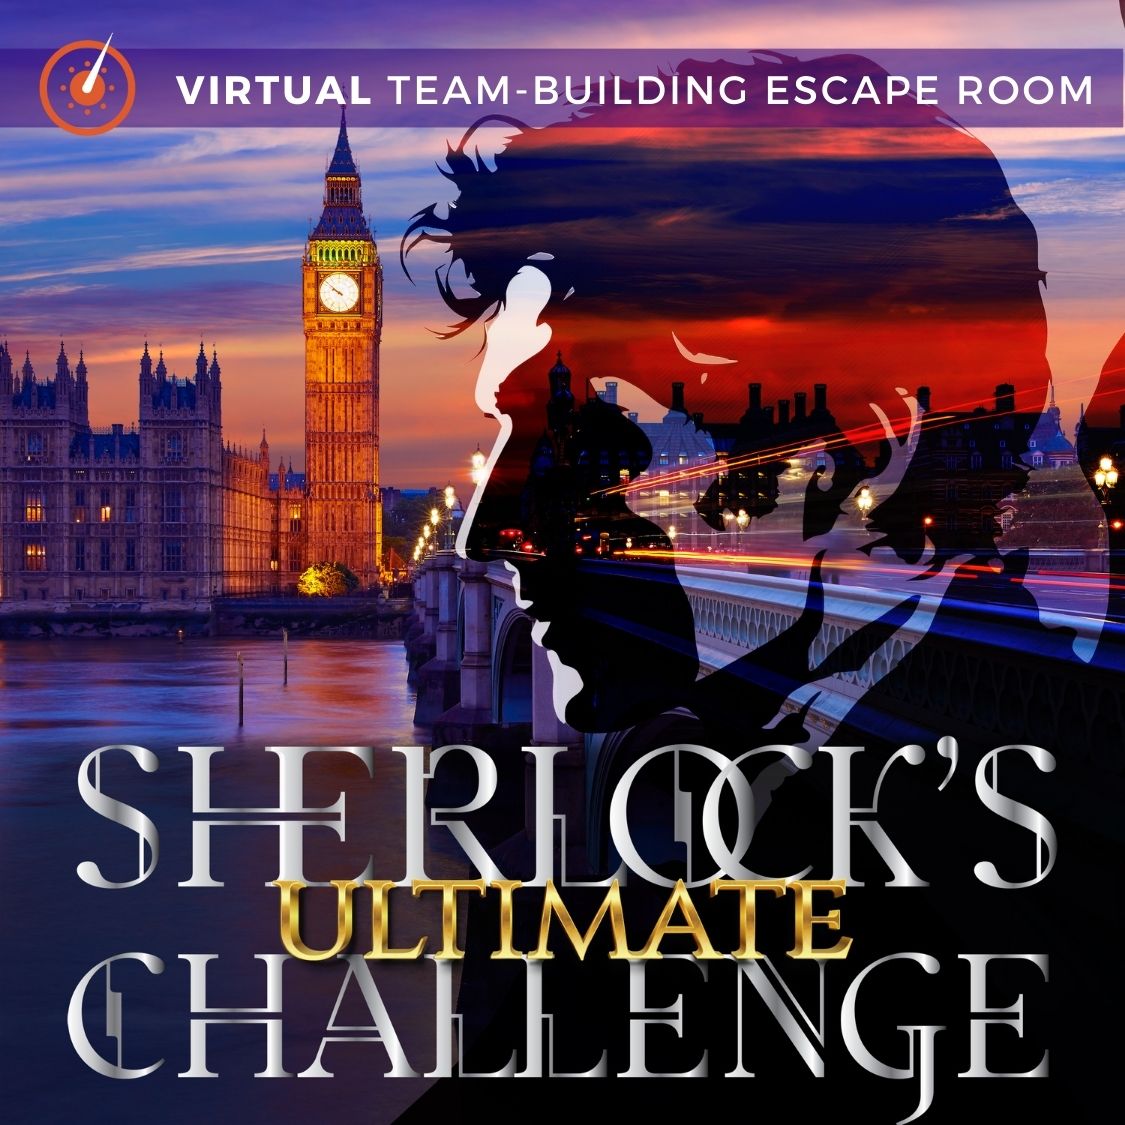 Sherlock's Escape Rooms - The Ultimate Escape Room Experience!